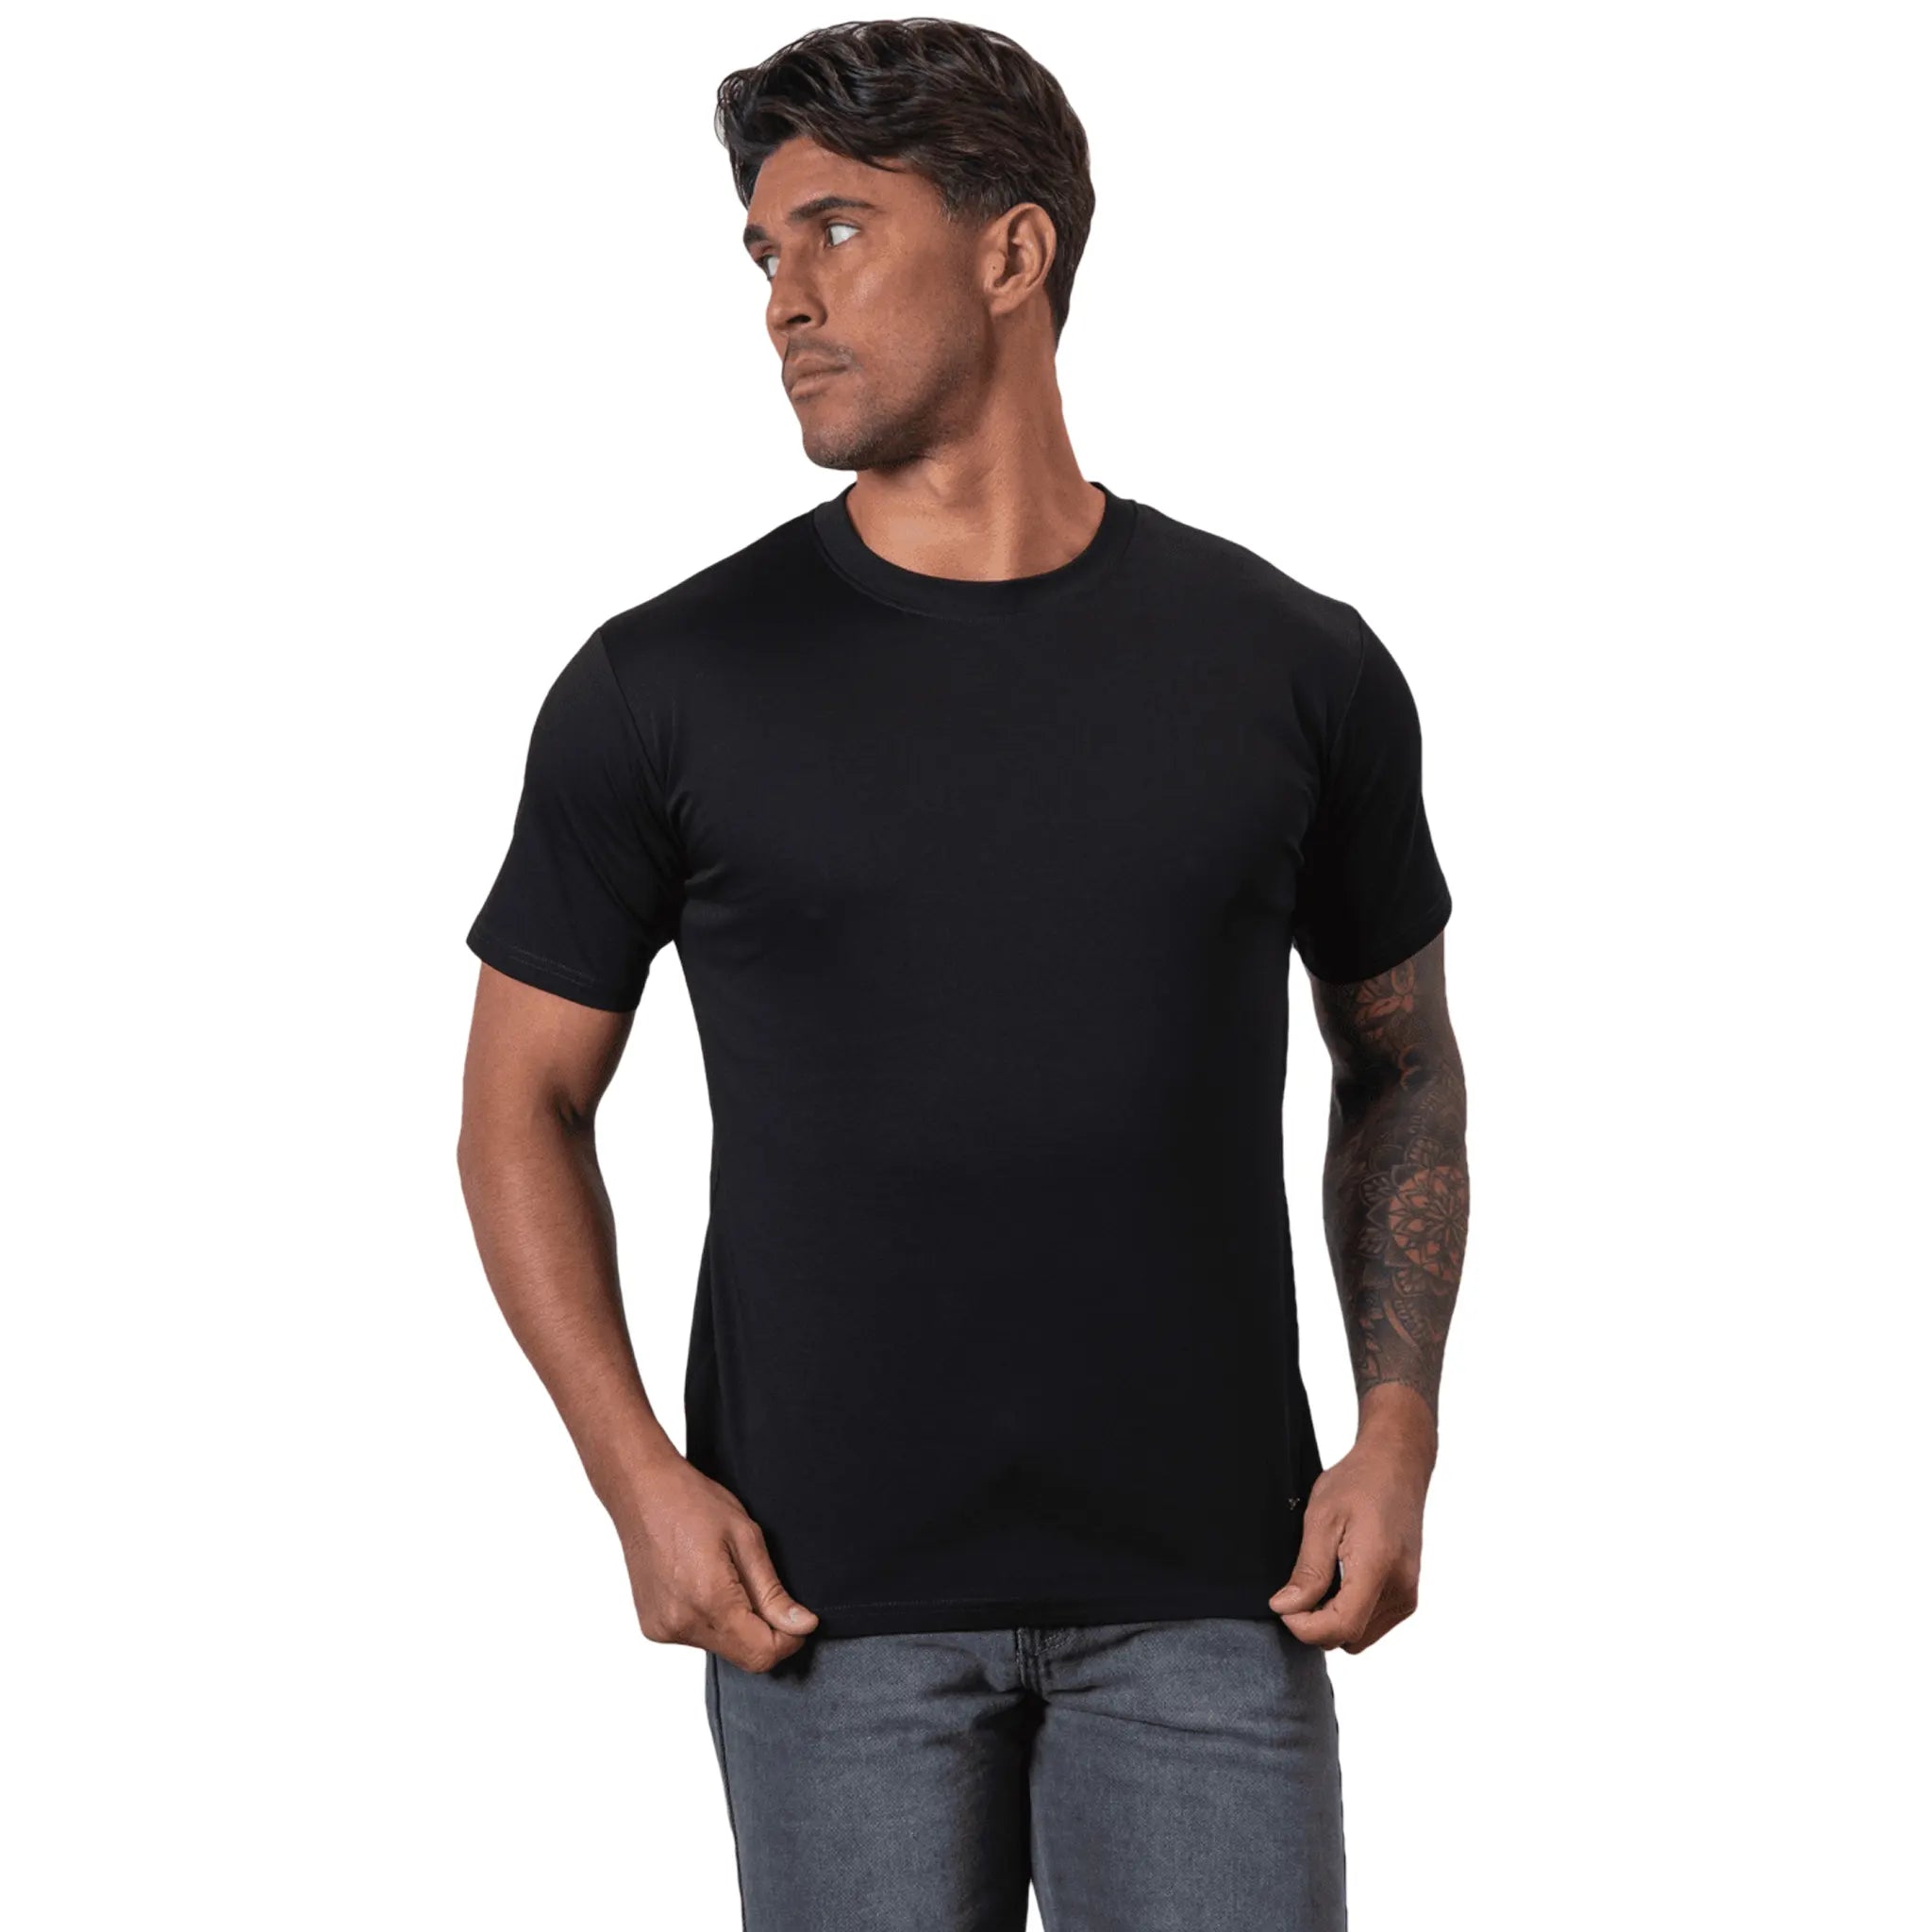 Front Detail view of Belier Mercerised Cotton Short Sleeve Premium Black T Shirt BM-125